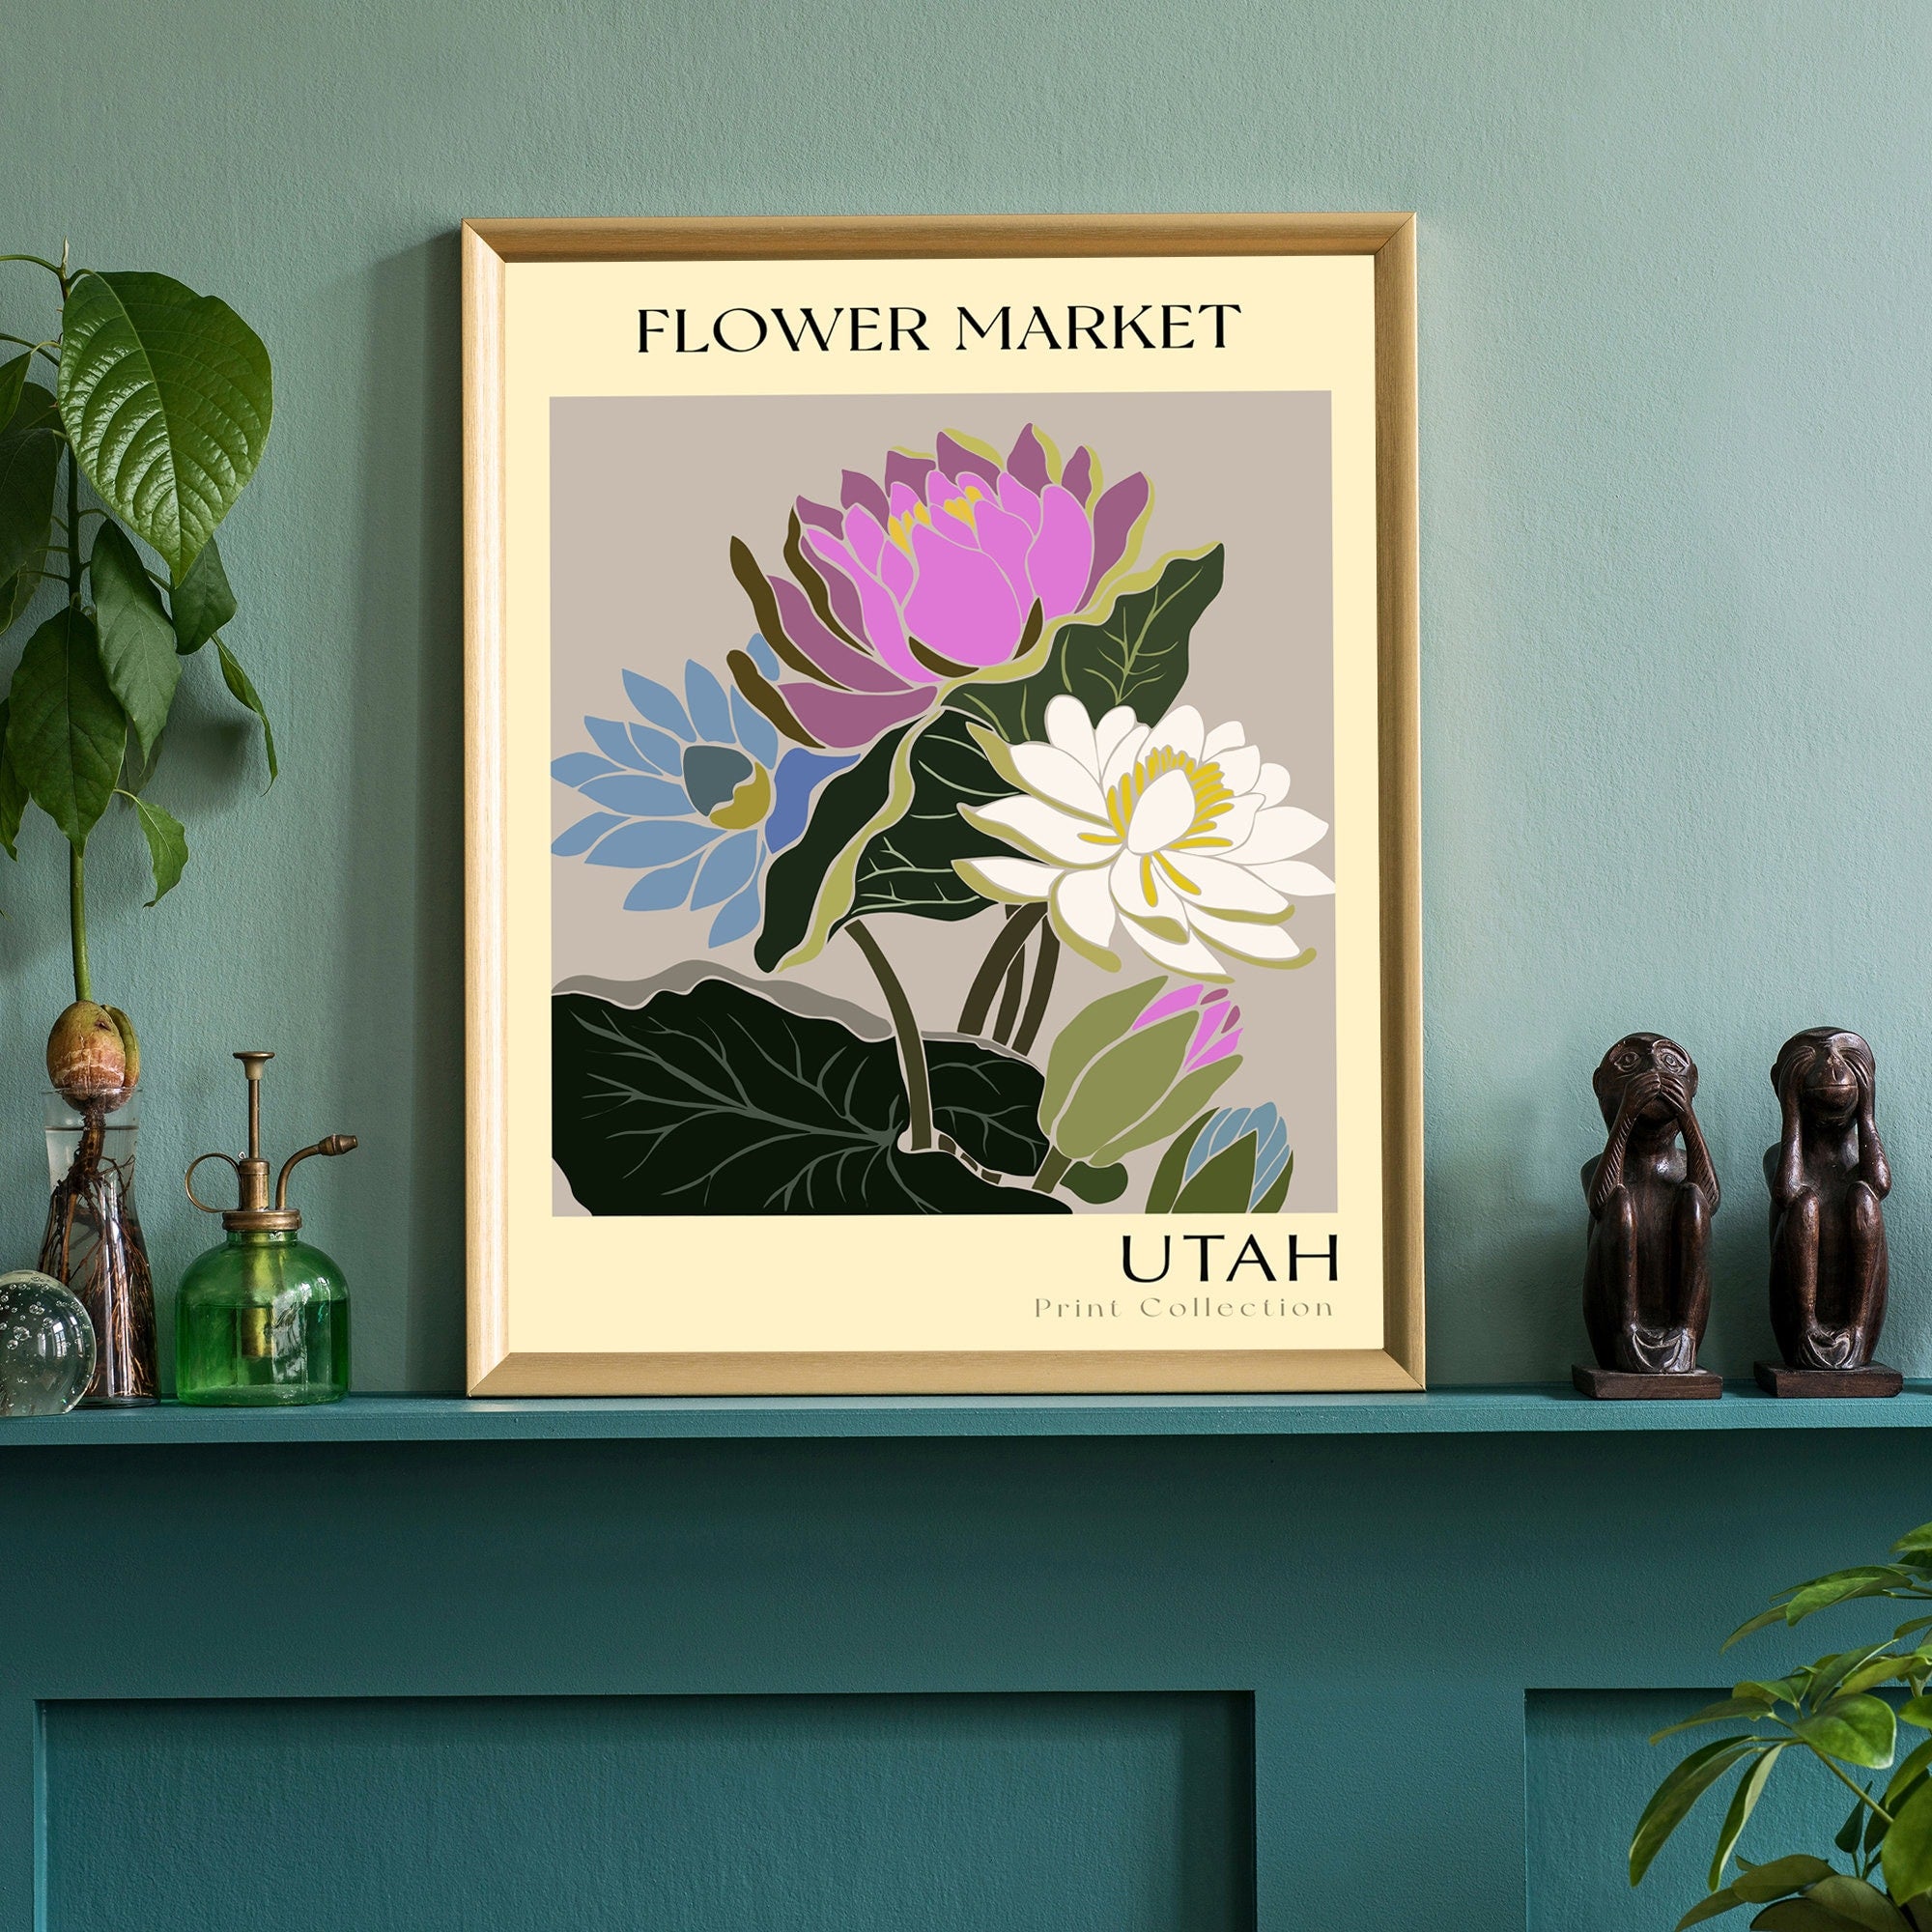 Utah State flower print, USA states poster, Utah flower market poster, Botanical poster, Nature poster artwork, Boho floral wall art